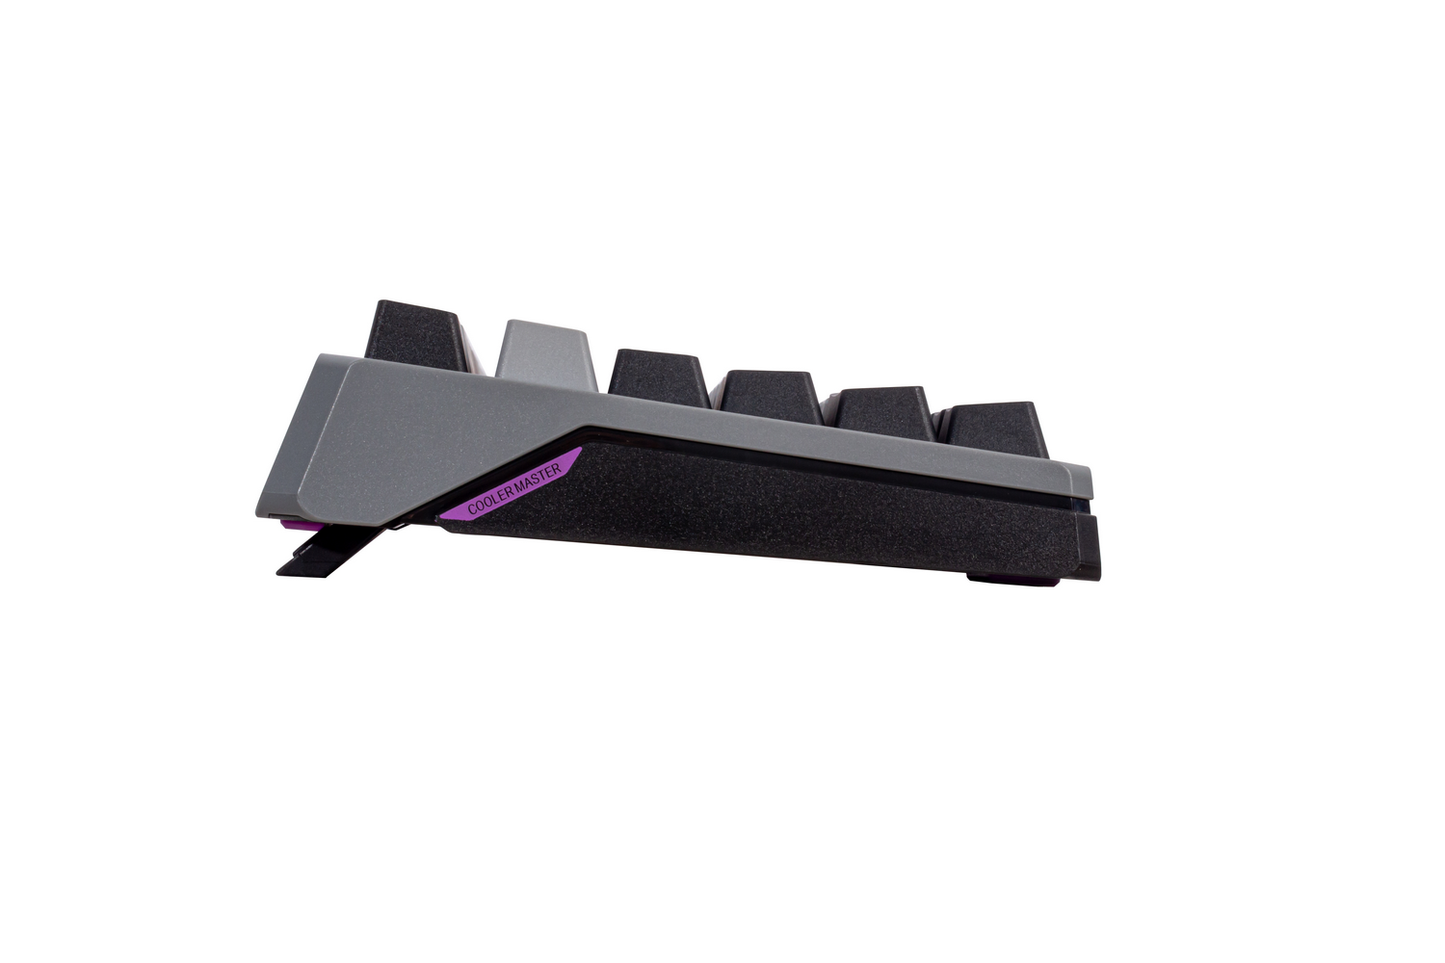 Cooler Master MK770 Space Gray Wireless Mechanical RGB Gaming Keyboard - US Layout